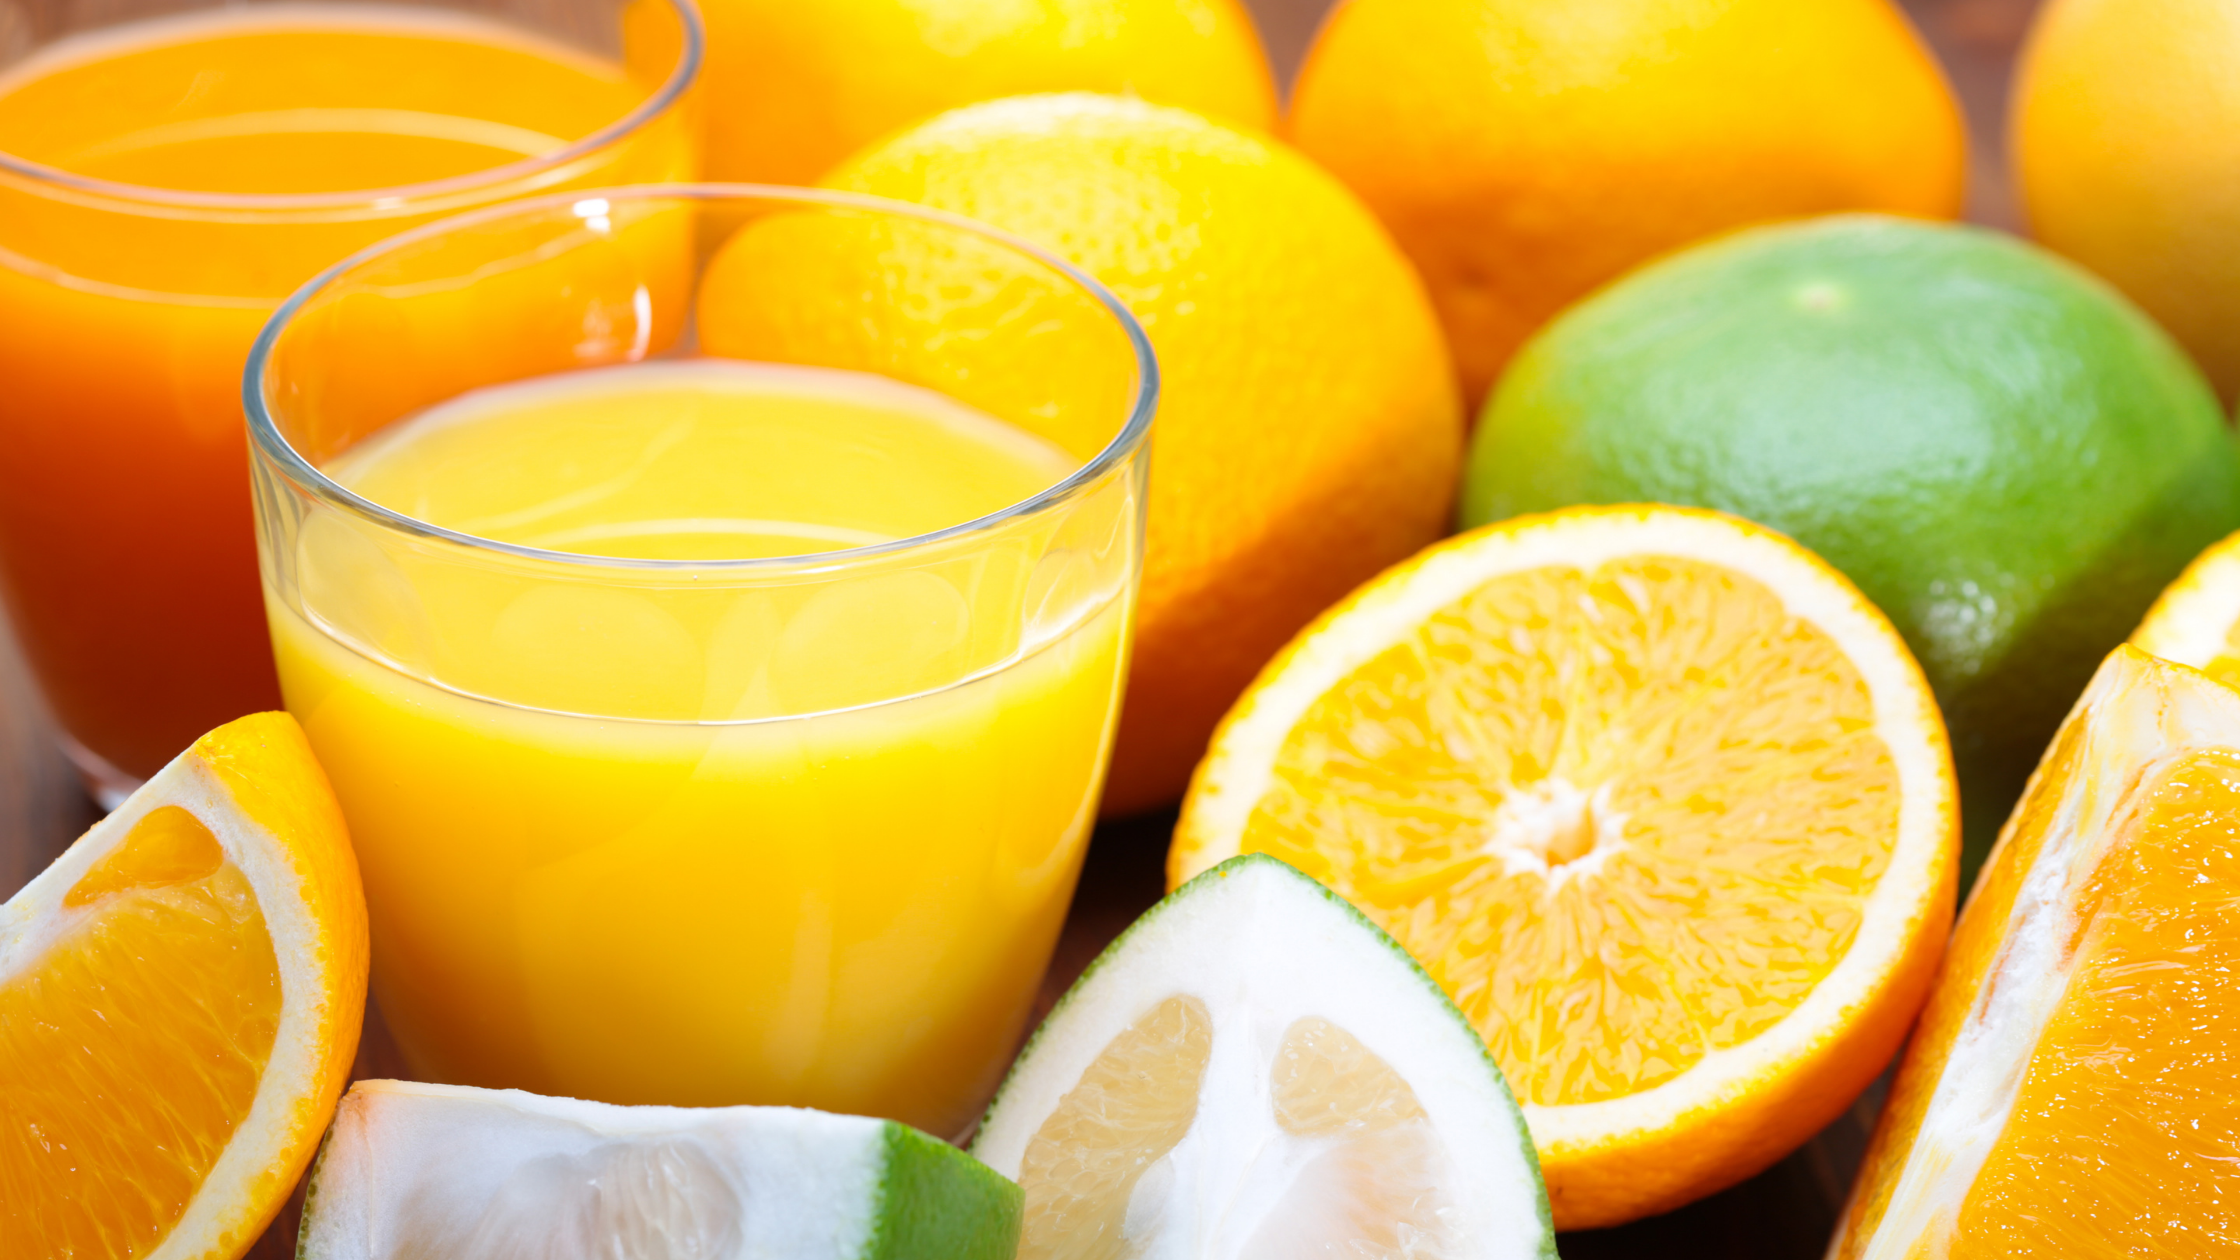 Two glasses of orange juice nestled amongst sliced and unsliced oranges